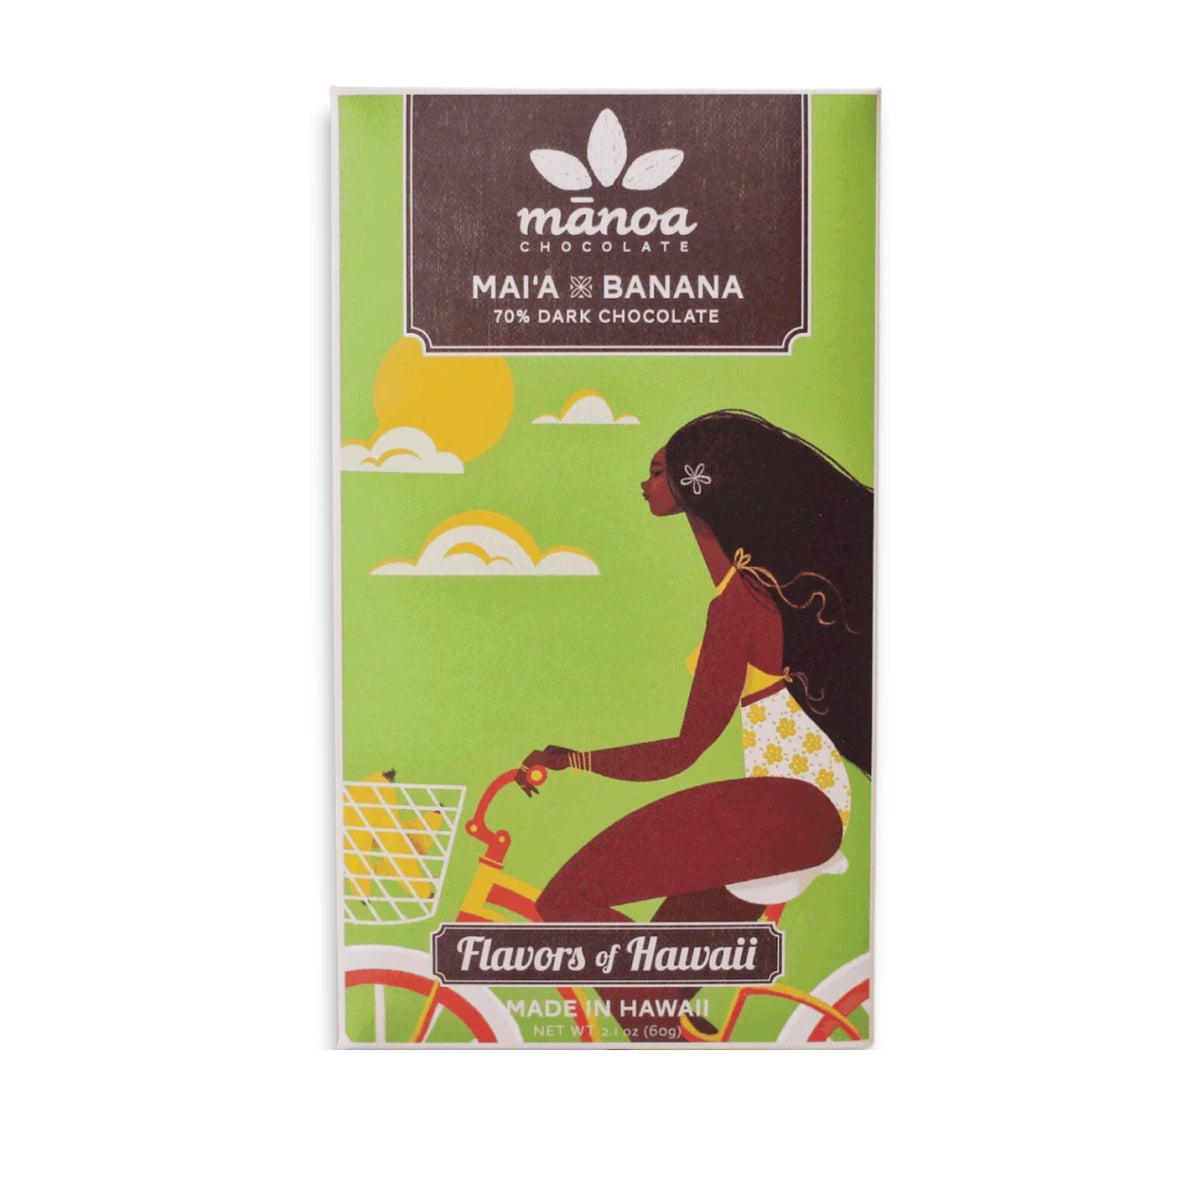 Pop-Up Mākeke - Manoa Chocolate - Mai’a x Banana Dark Milk Chocolate Bar - Front View